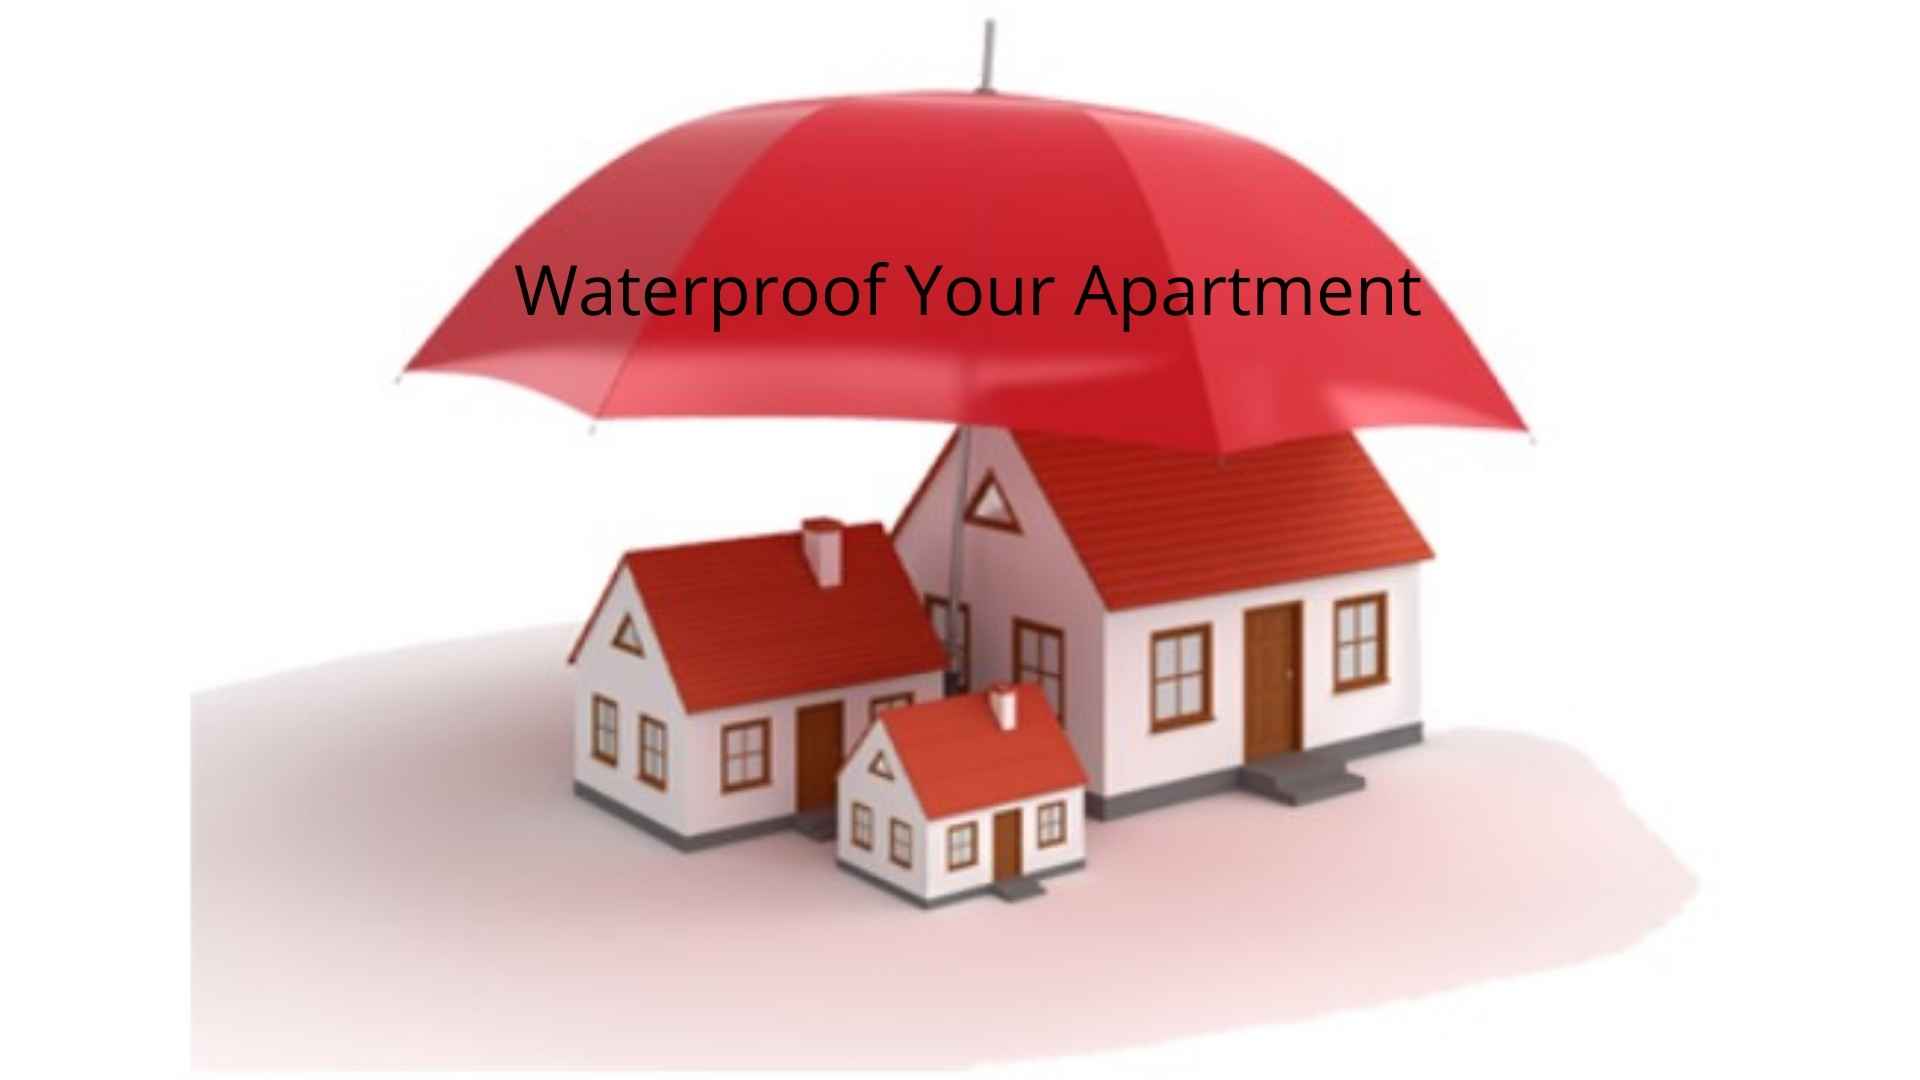 Waterproof Your Apartment